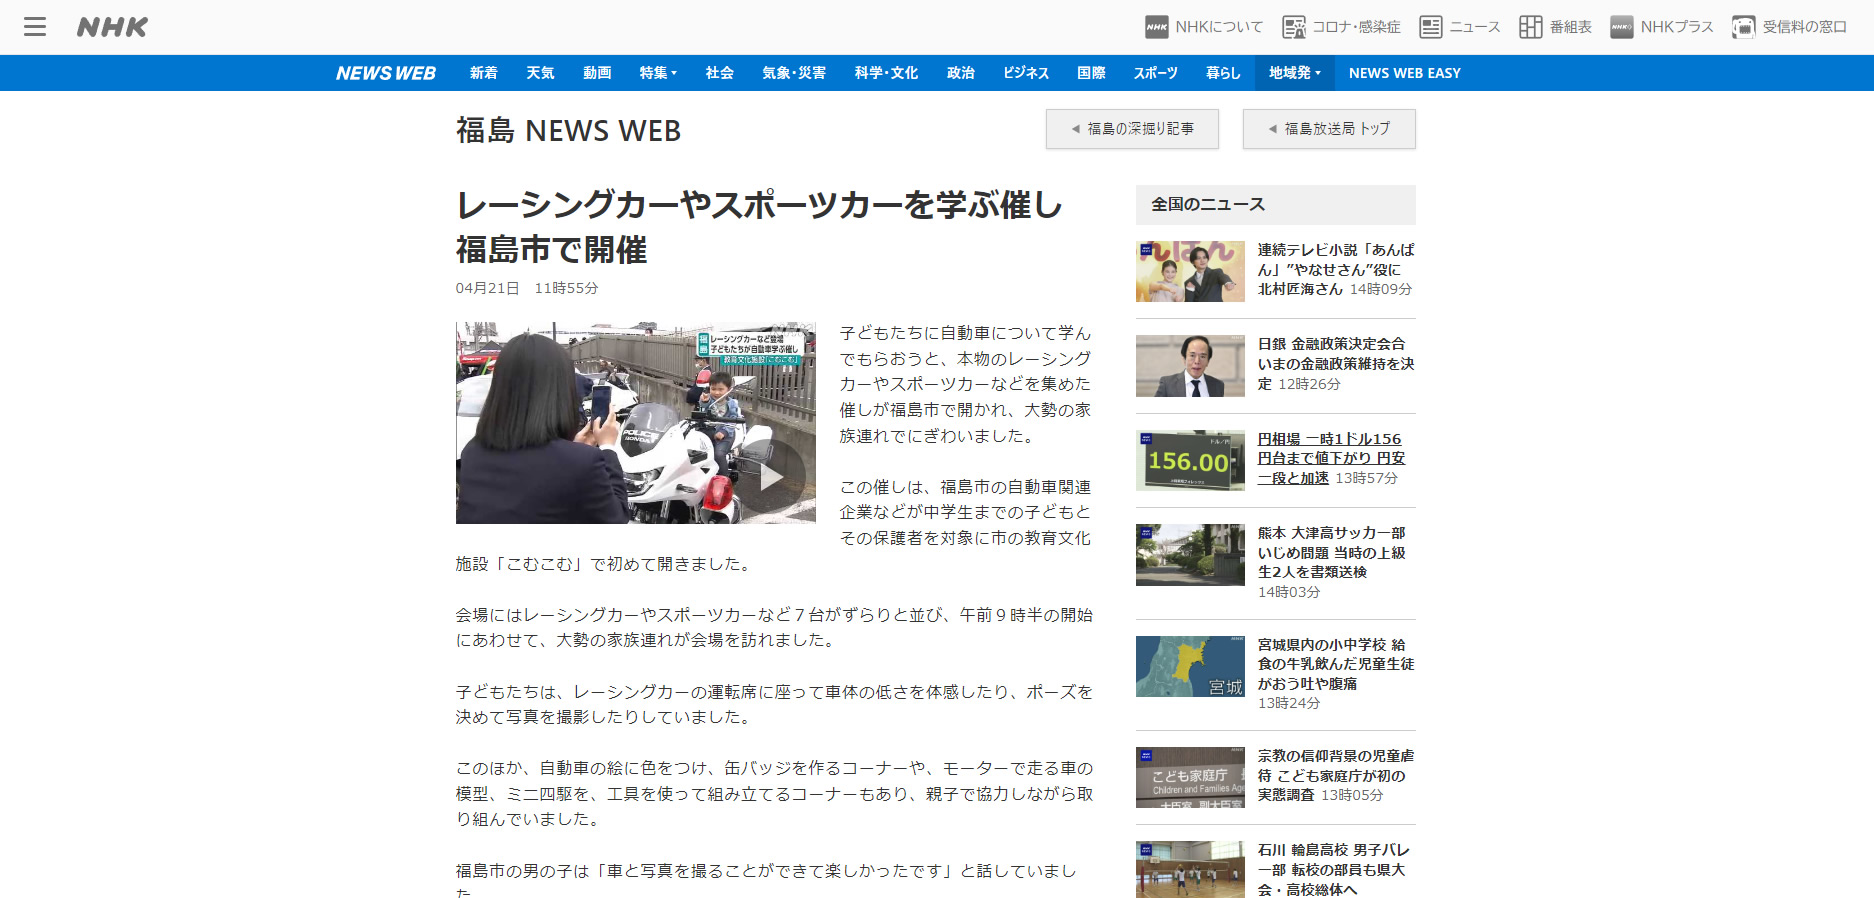 HNK 福島 NEWS WEB